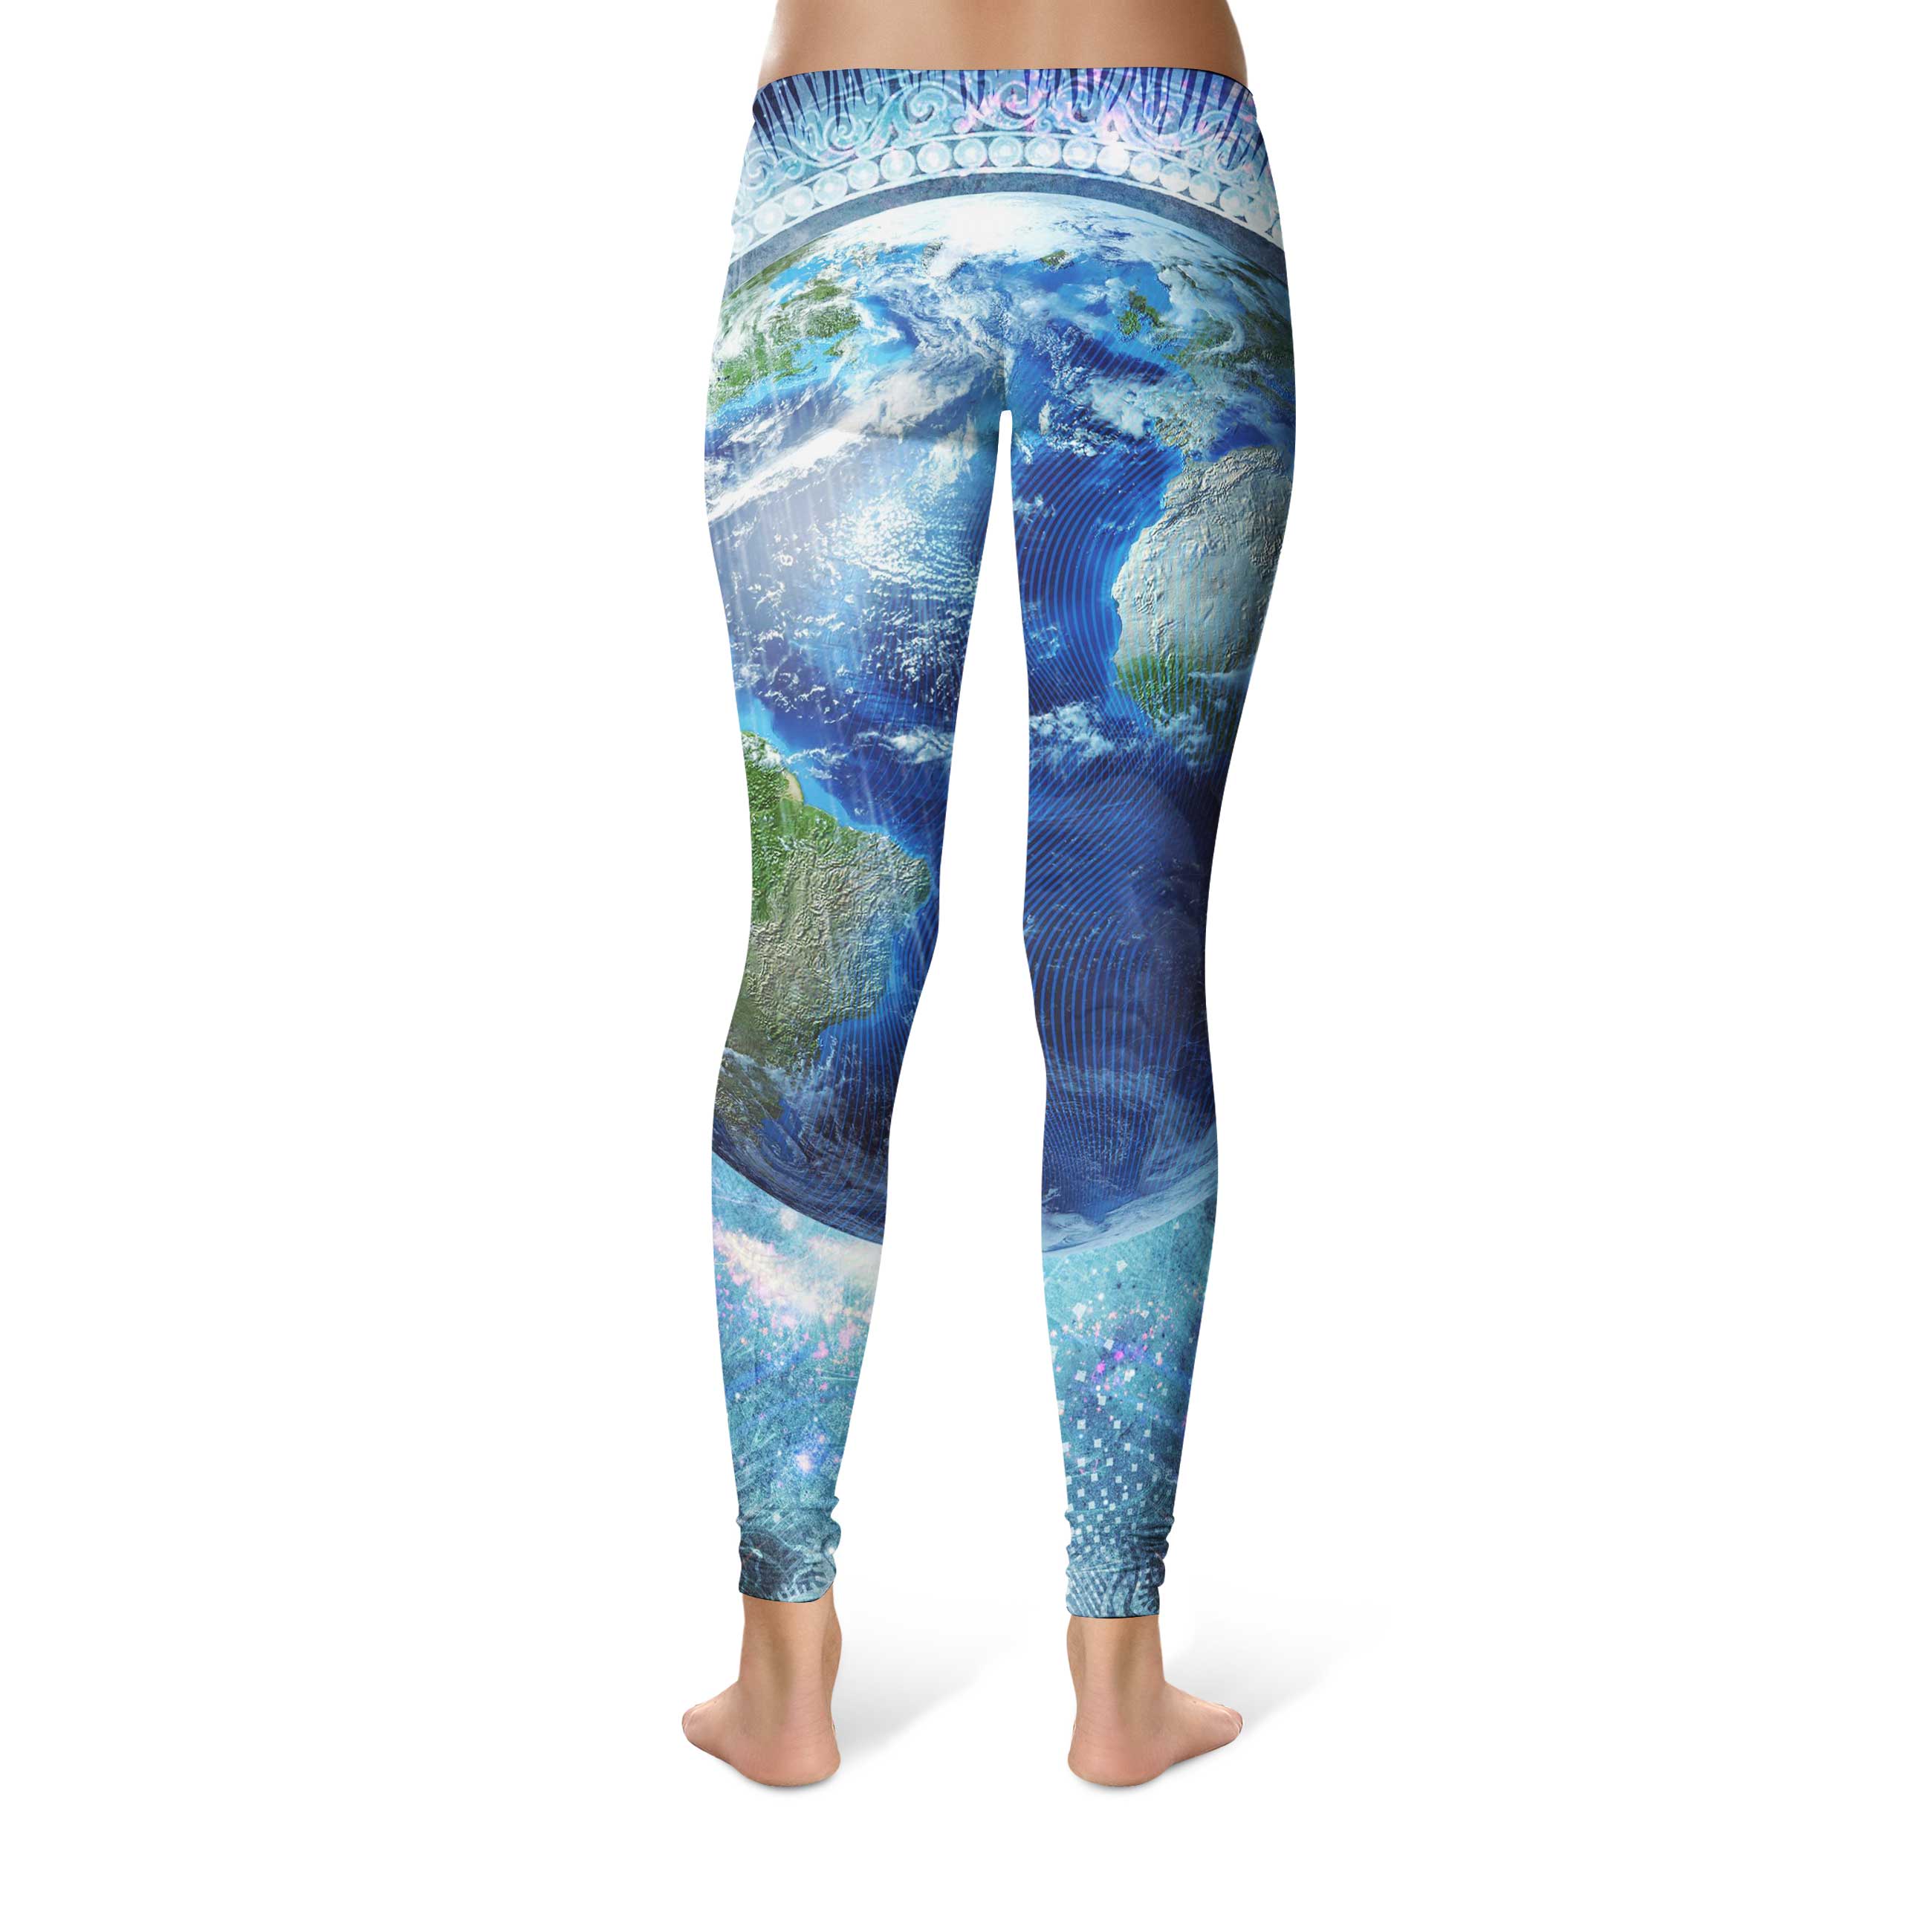 Cathalem Earth Yoga Pants Women Full Length Workout Running Sports Tights  Lift Yoga Pants Yoga Pants for Teens with Pockets Pants Grey Medium